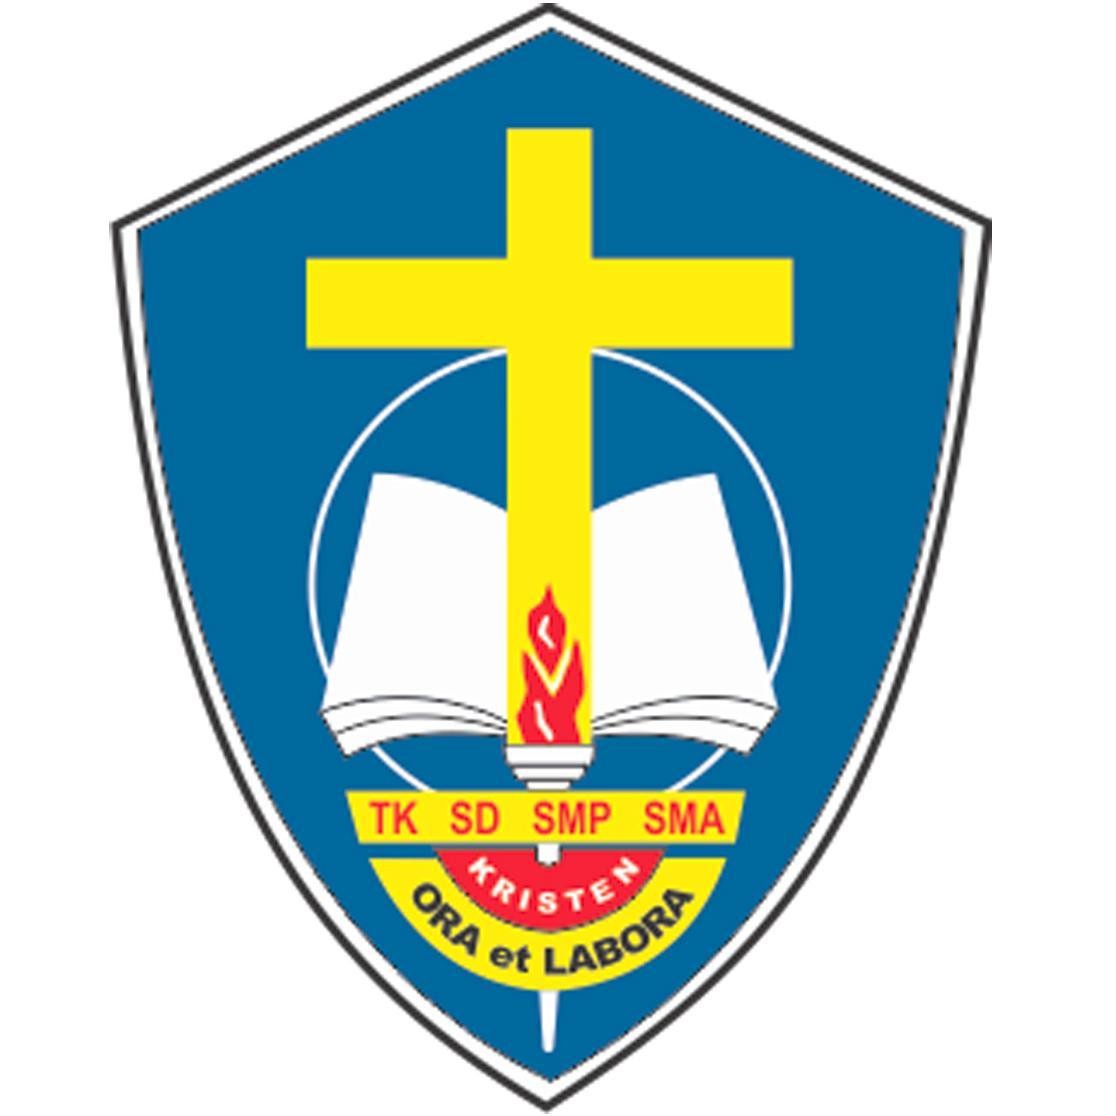 Yayasan Pendidikan Kristen ORA et LABORA JAKARTA - Devjobsindo ORG